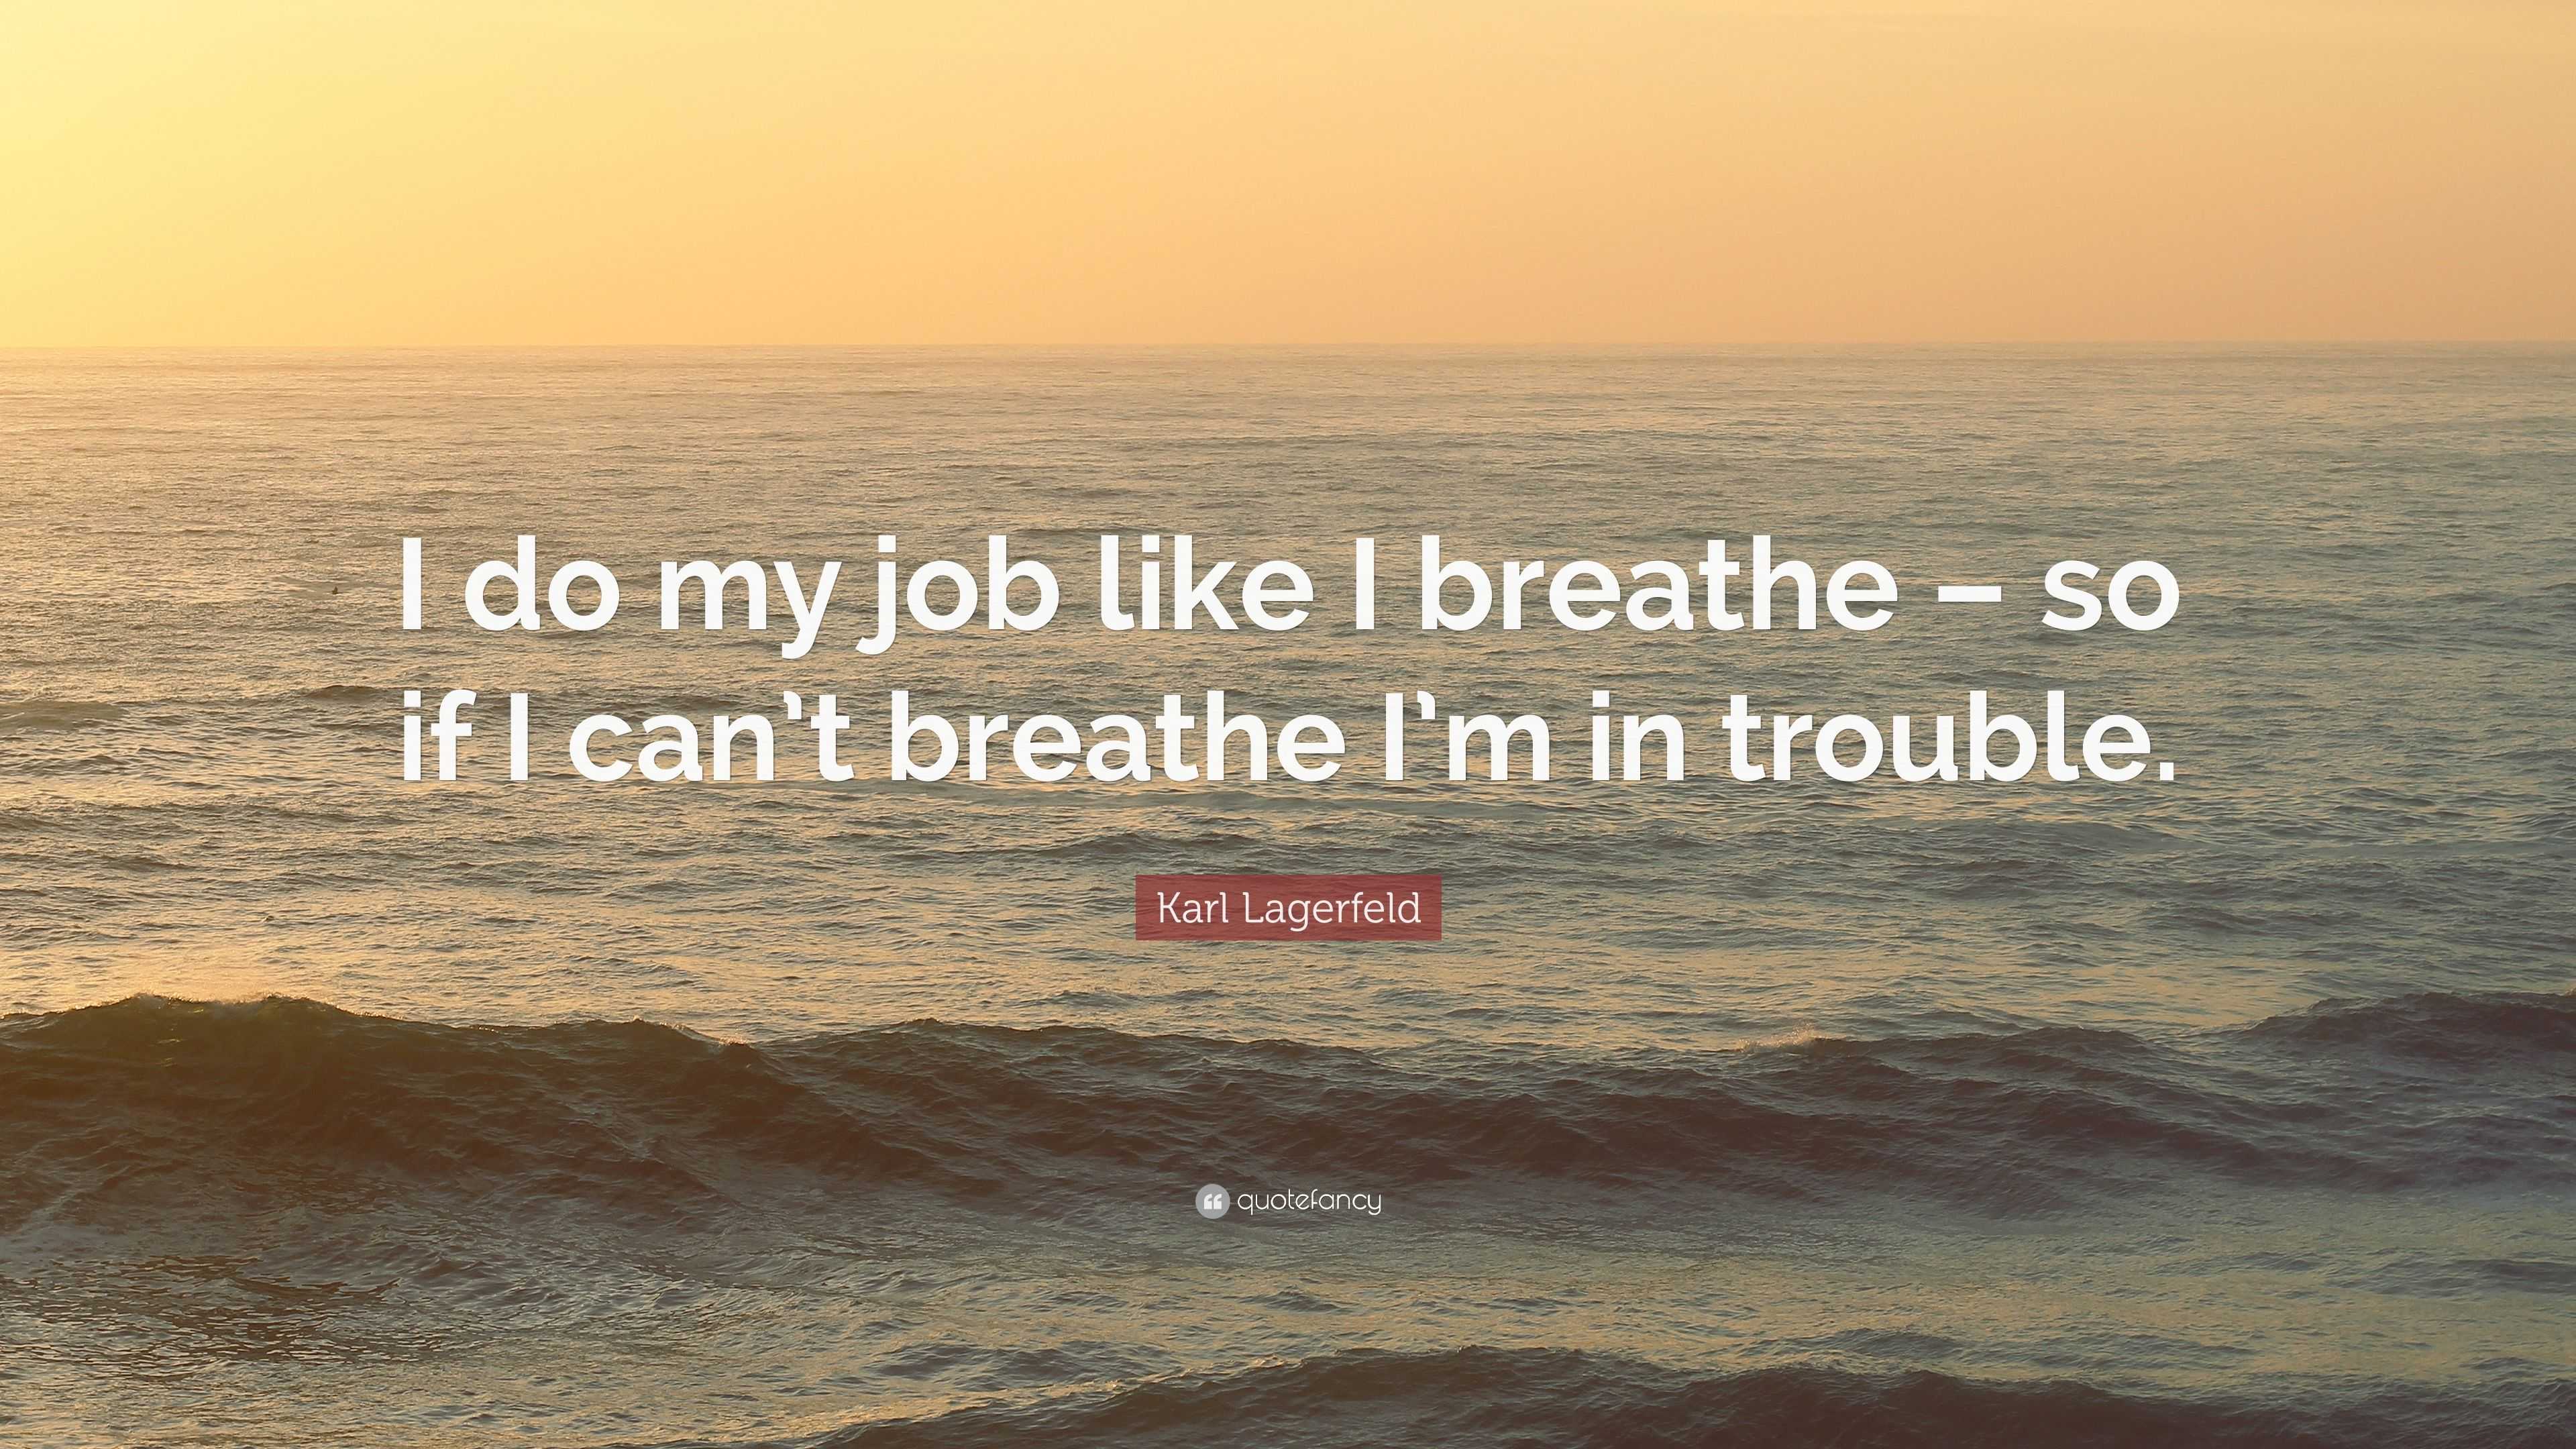 Karl Lagerfeld quote: I do my job like I breathe — so if